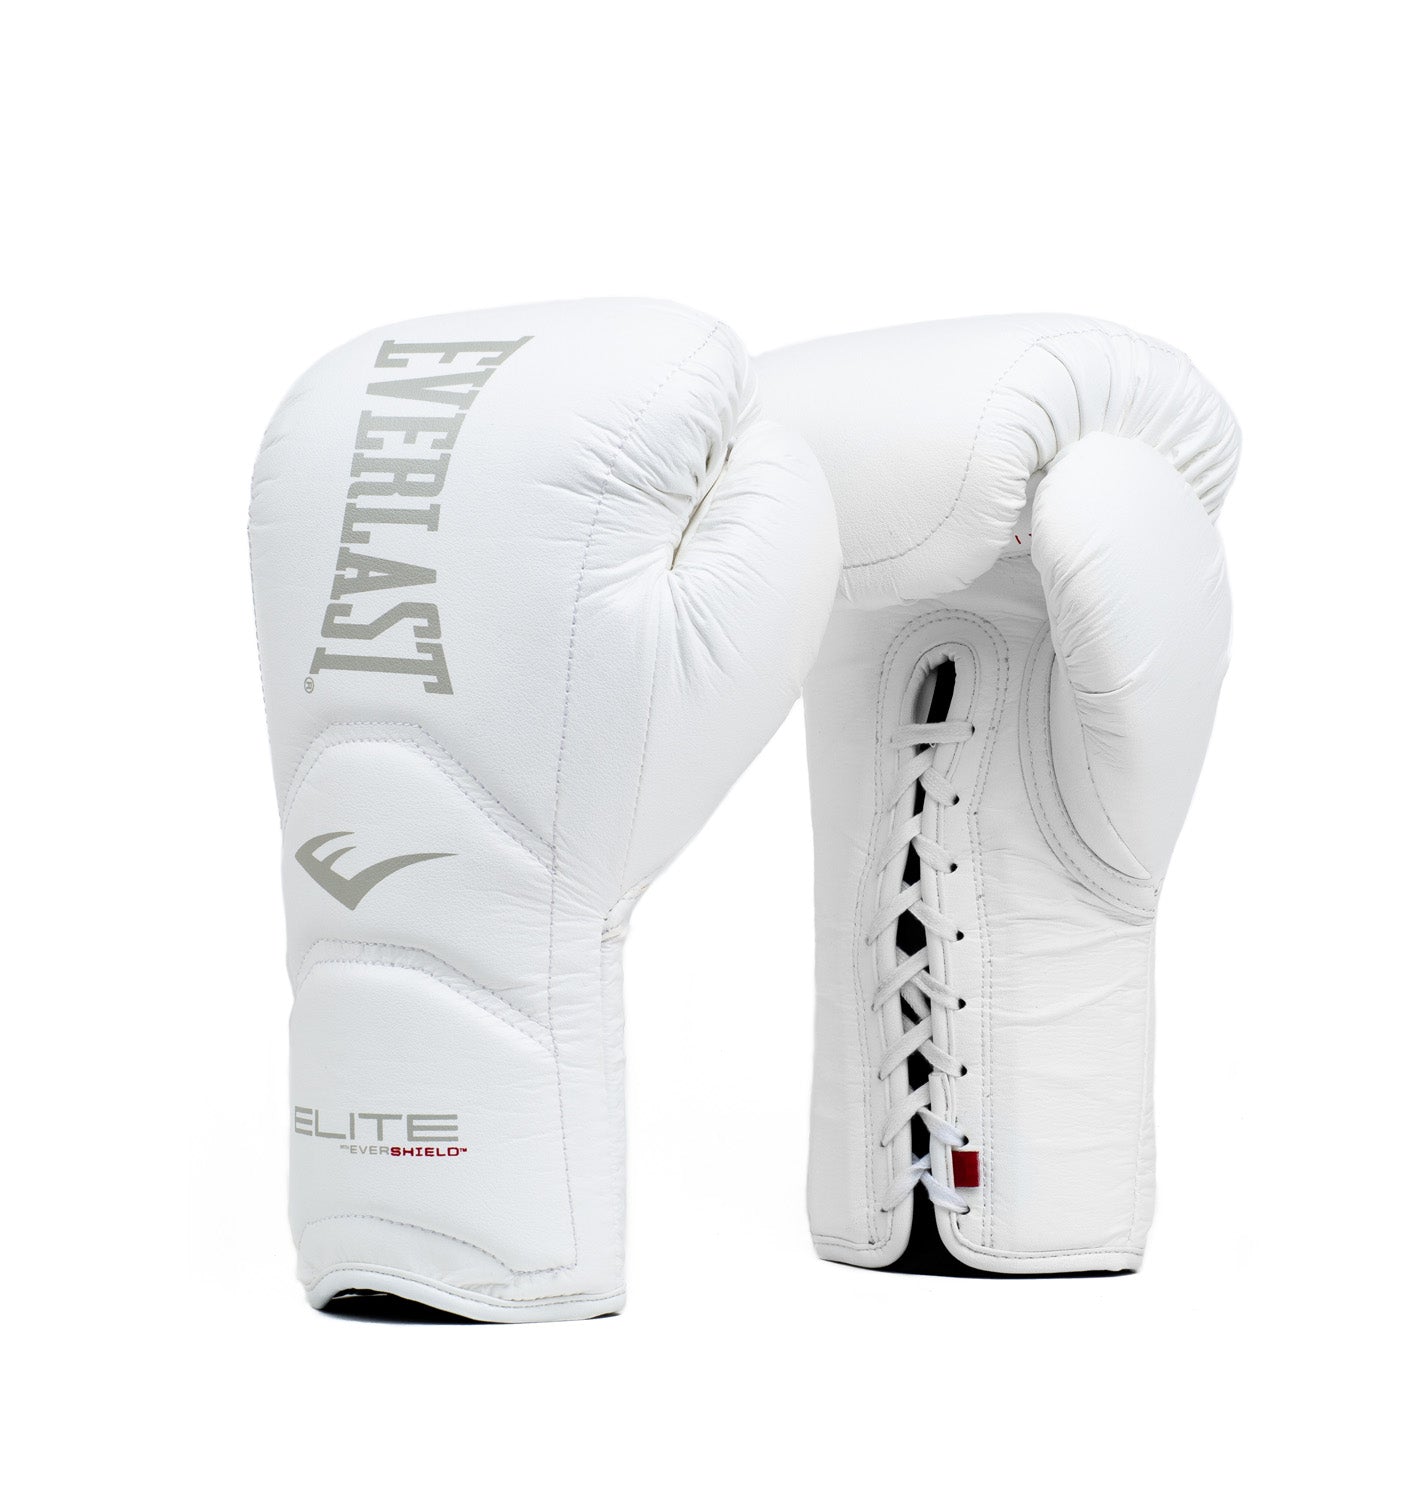 Everlast Core Training S/M Gloves in White